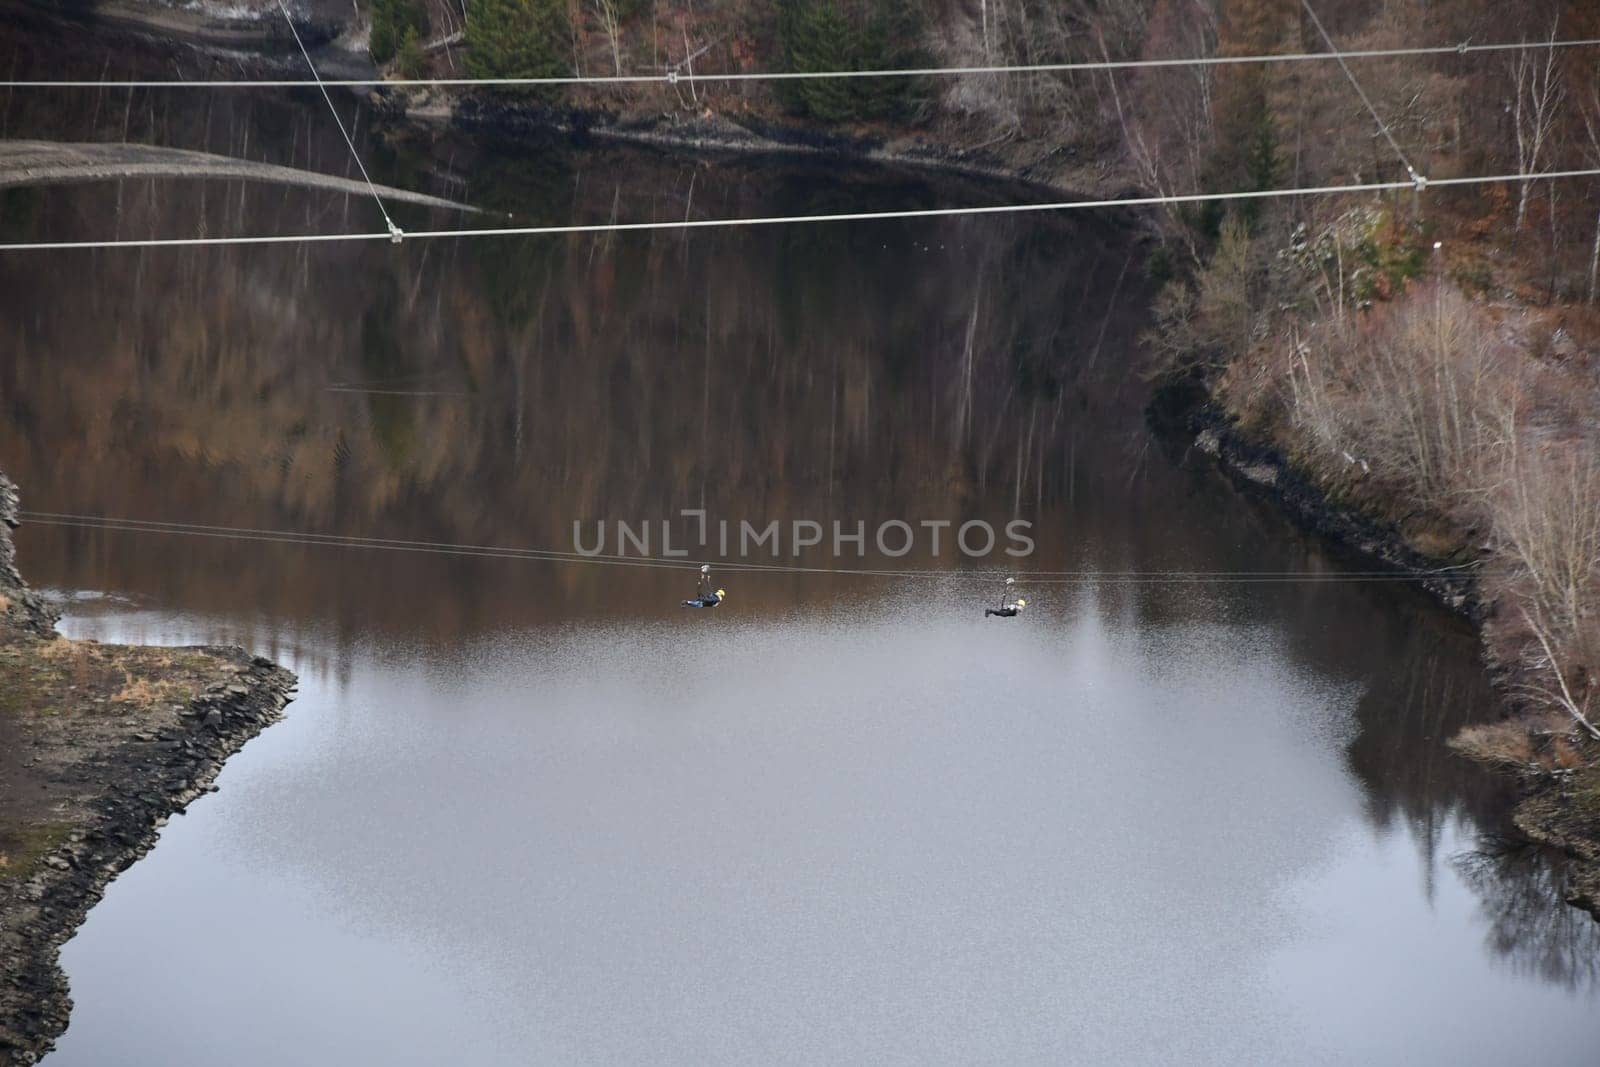 People on a giant zipline flying over the Rappbode reservoir near Elbingerode, Harz, Germany